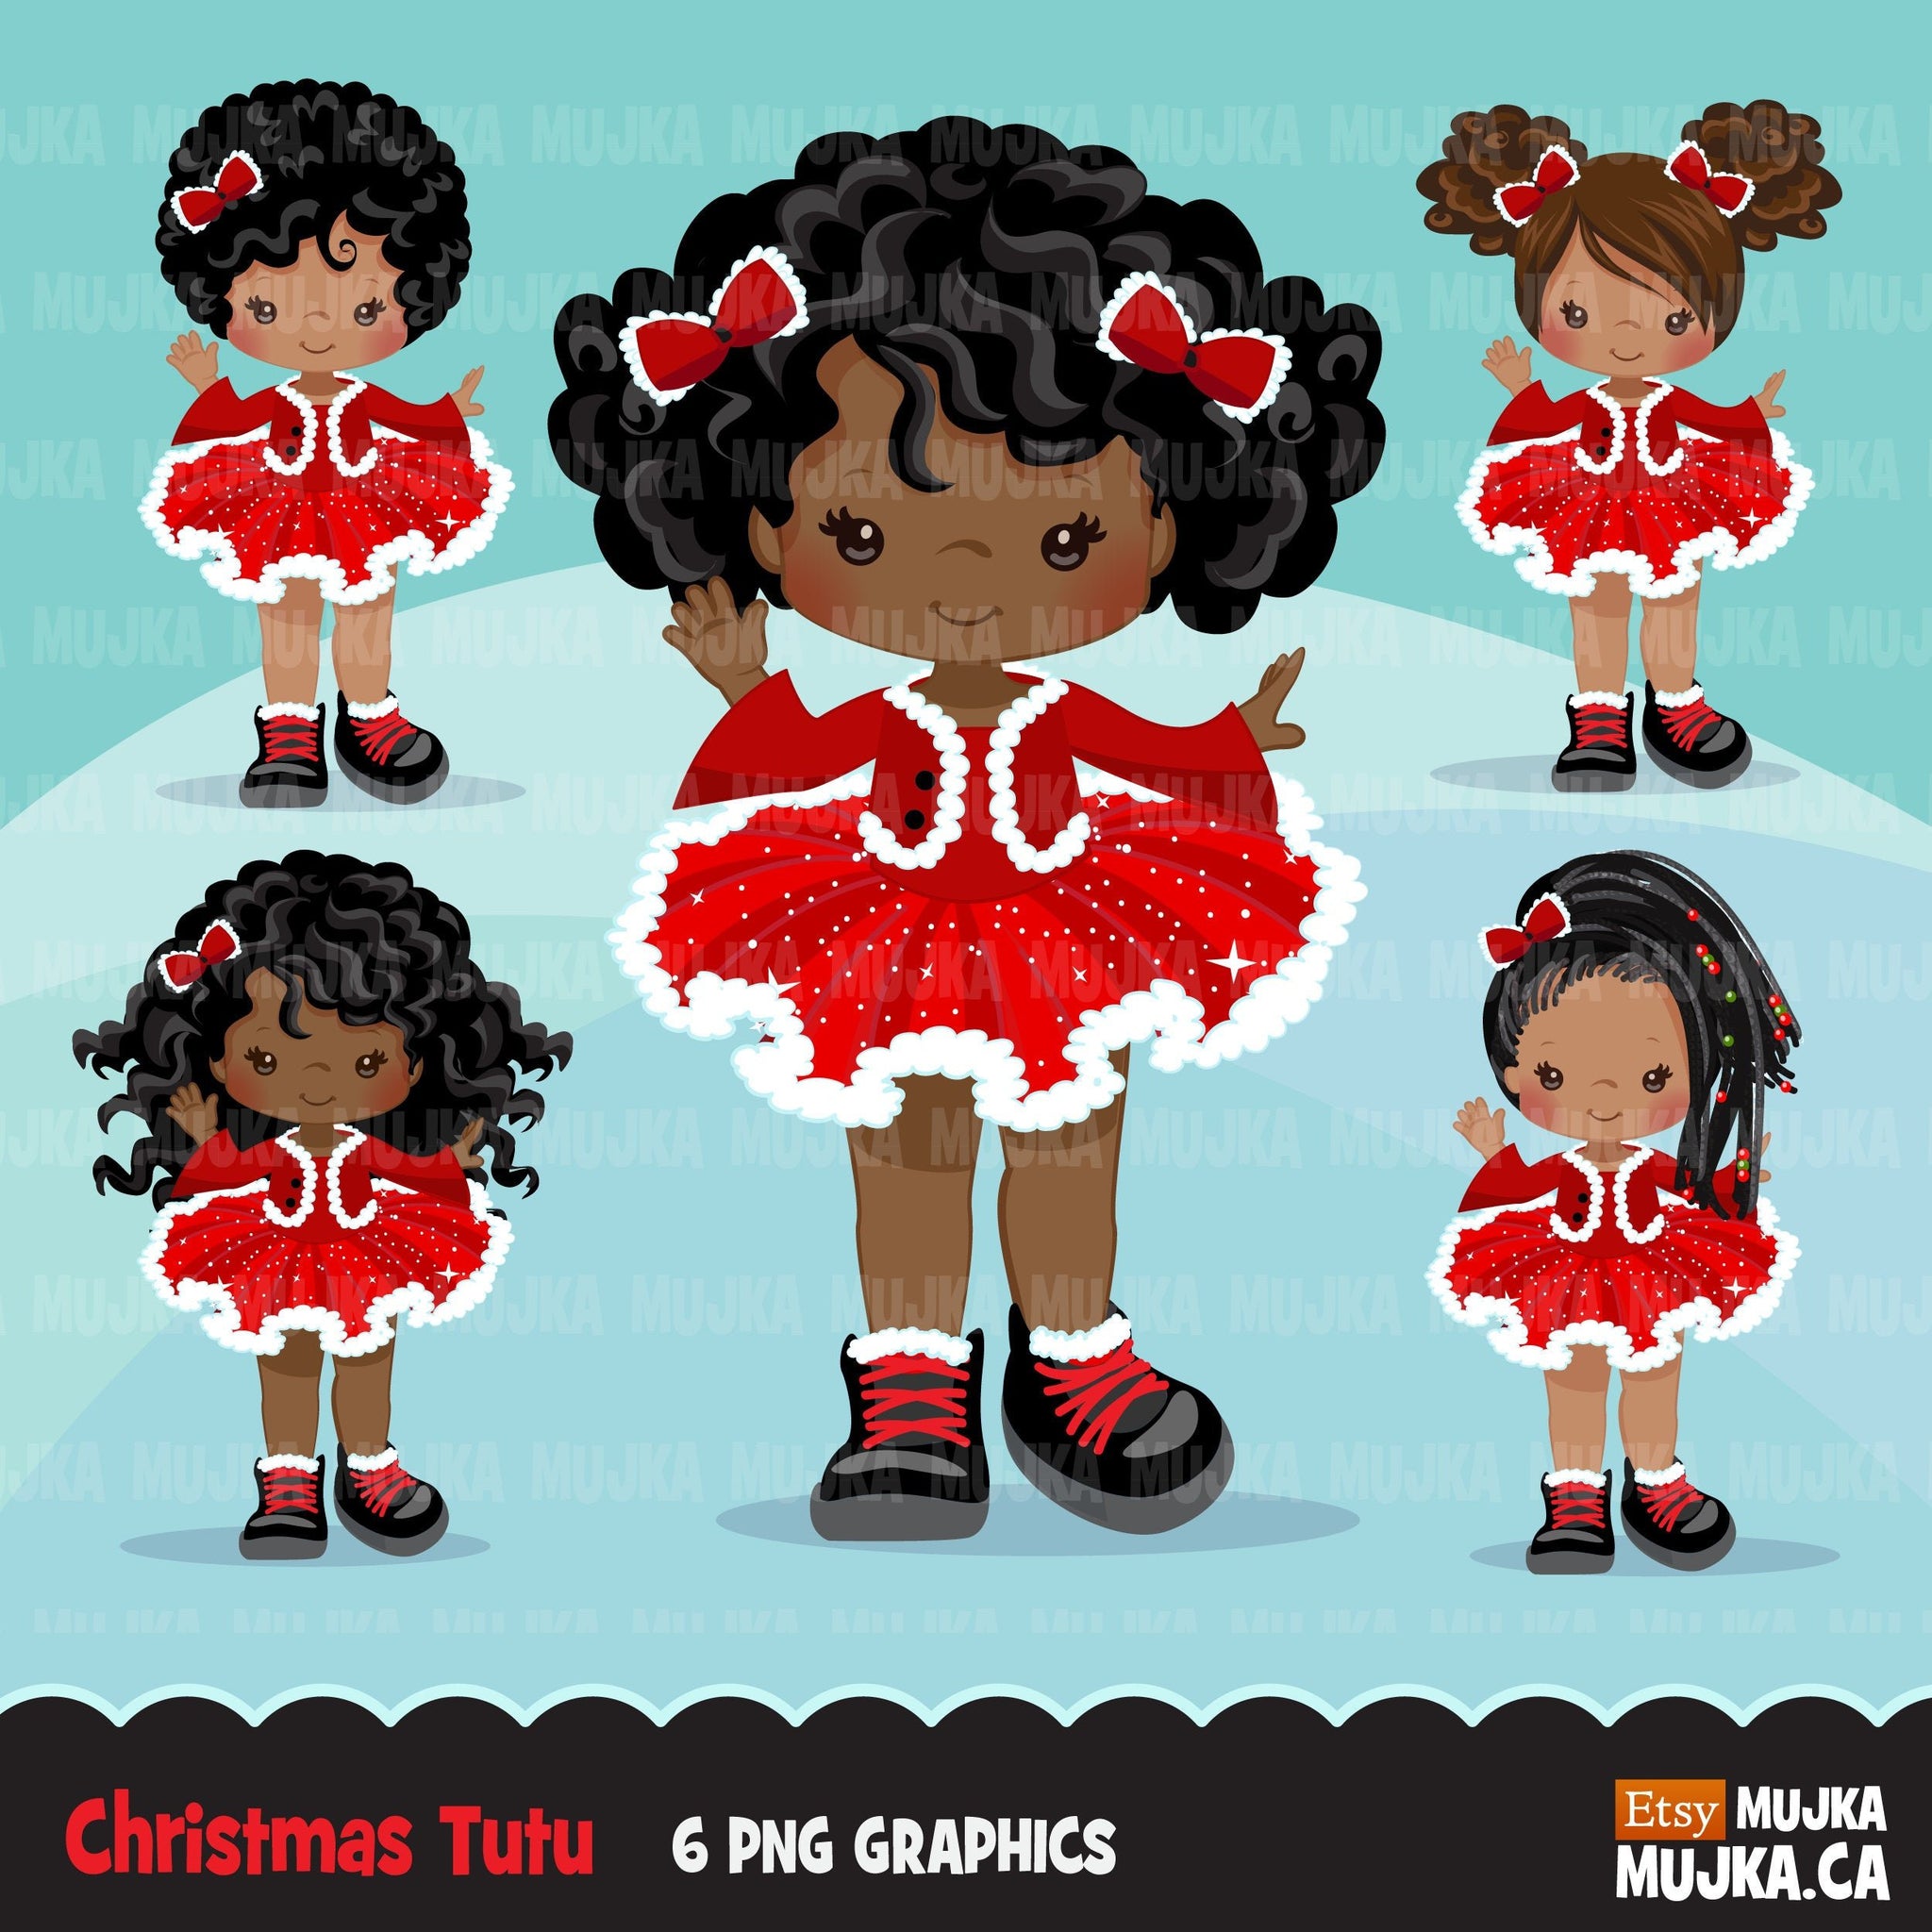 Christmas tutu clipart, Santa Black girls with tutu dress, commercial use graphics, afro christmas clip art